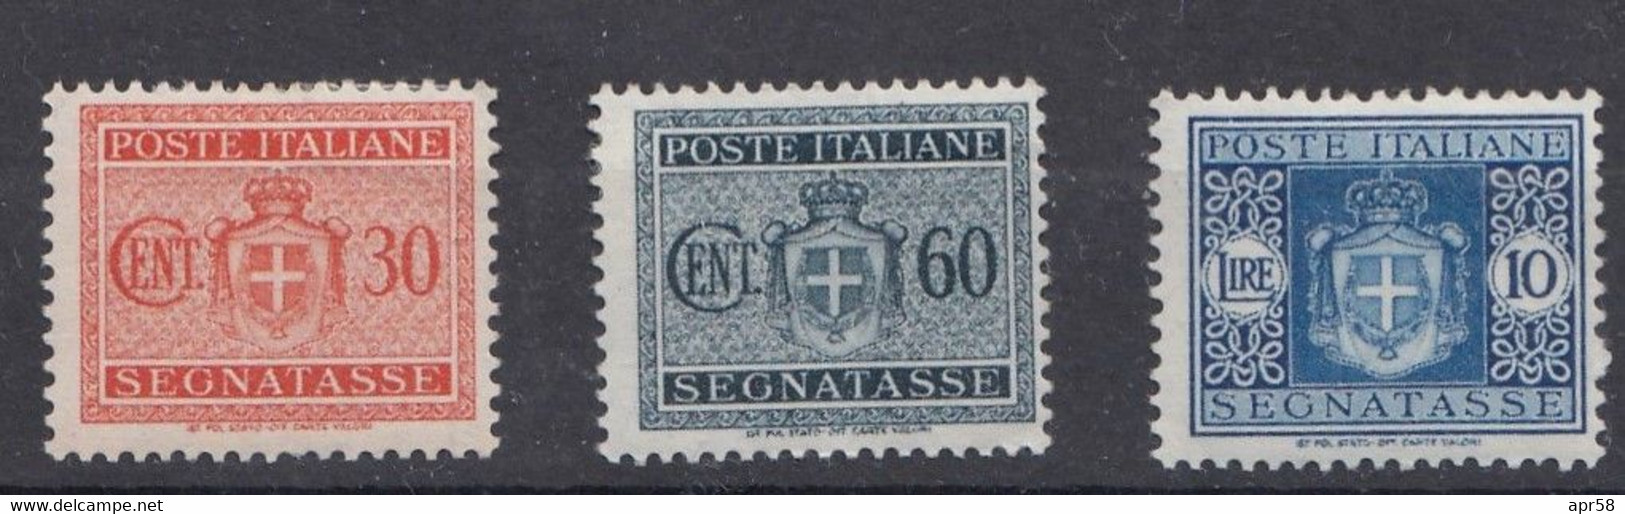 1945 Segnatasse    Sass77-30c-sass-80-60c-sass84-10li - Segnatasse